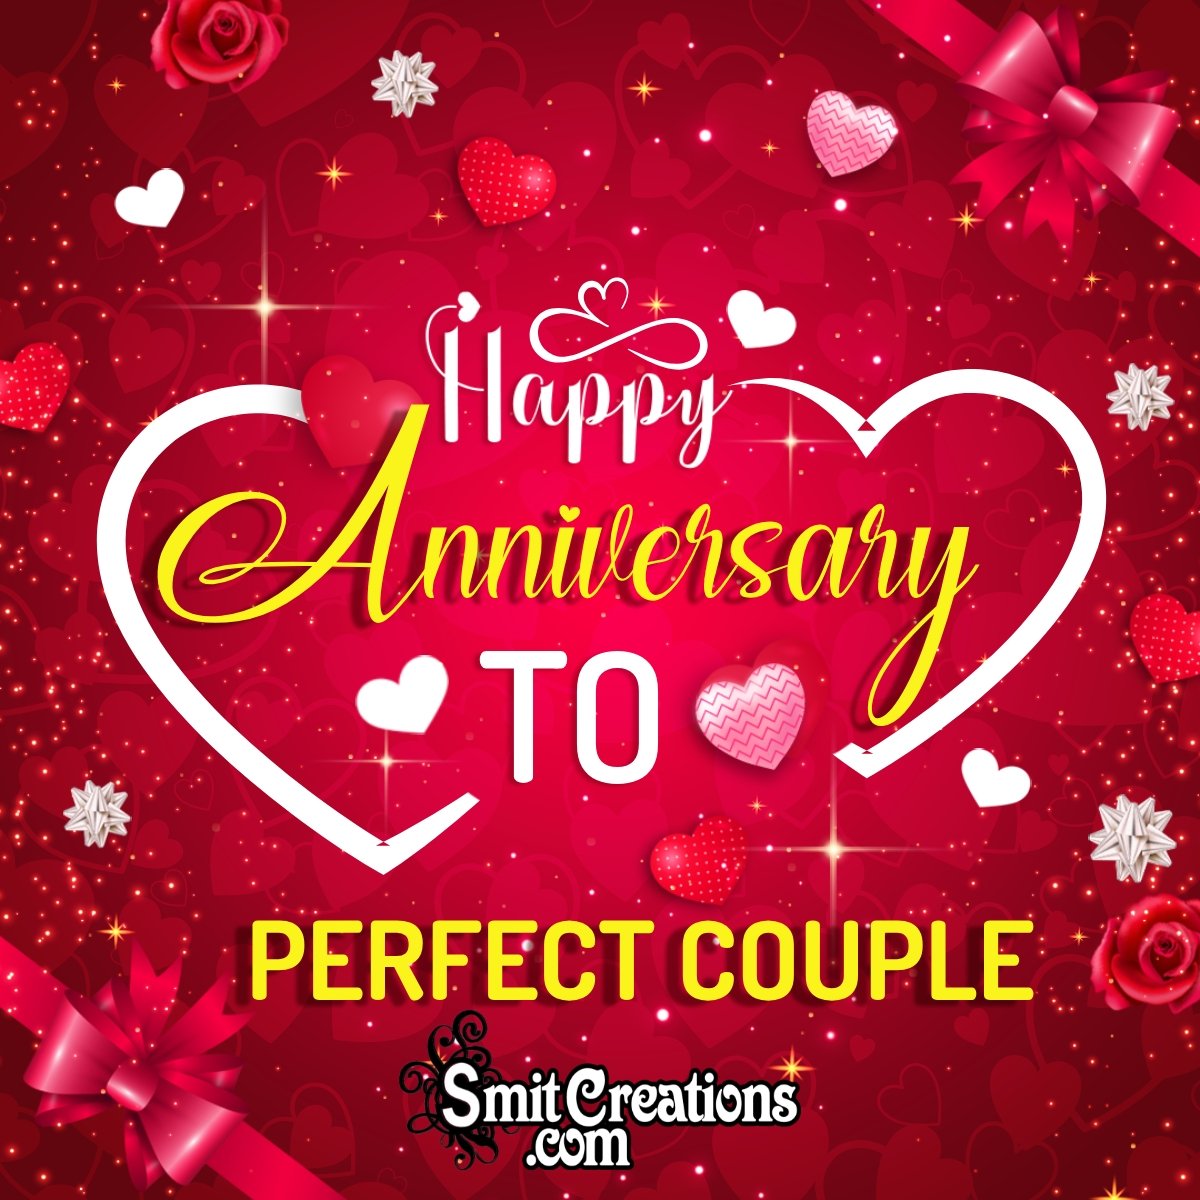 Happy Anniversary To Perfect Couple